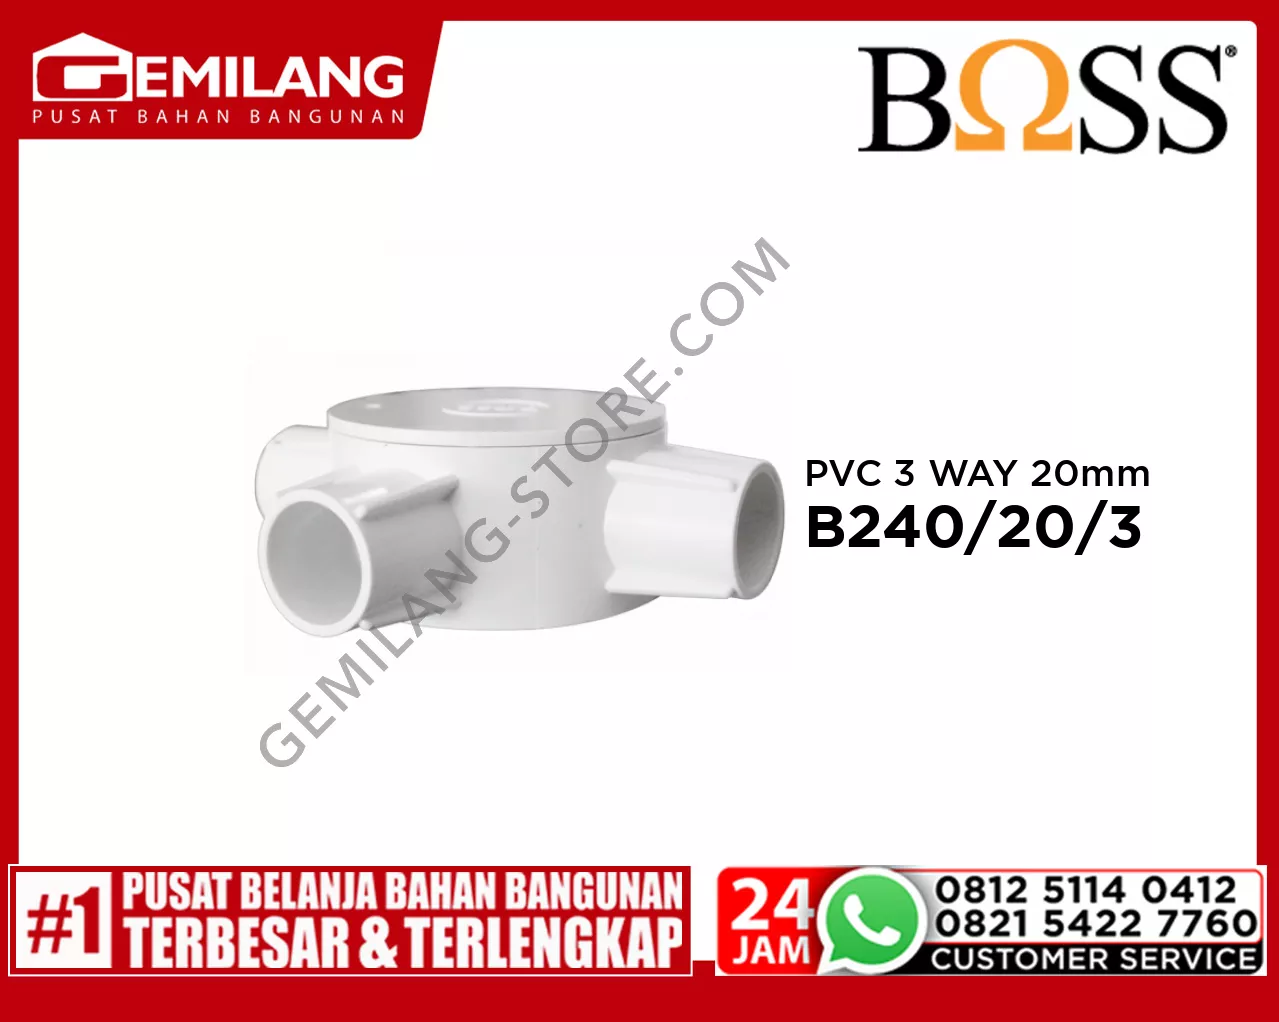 BOSS PVC 3 WAY WHITE 20mm B240/20/3 WE